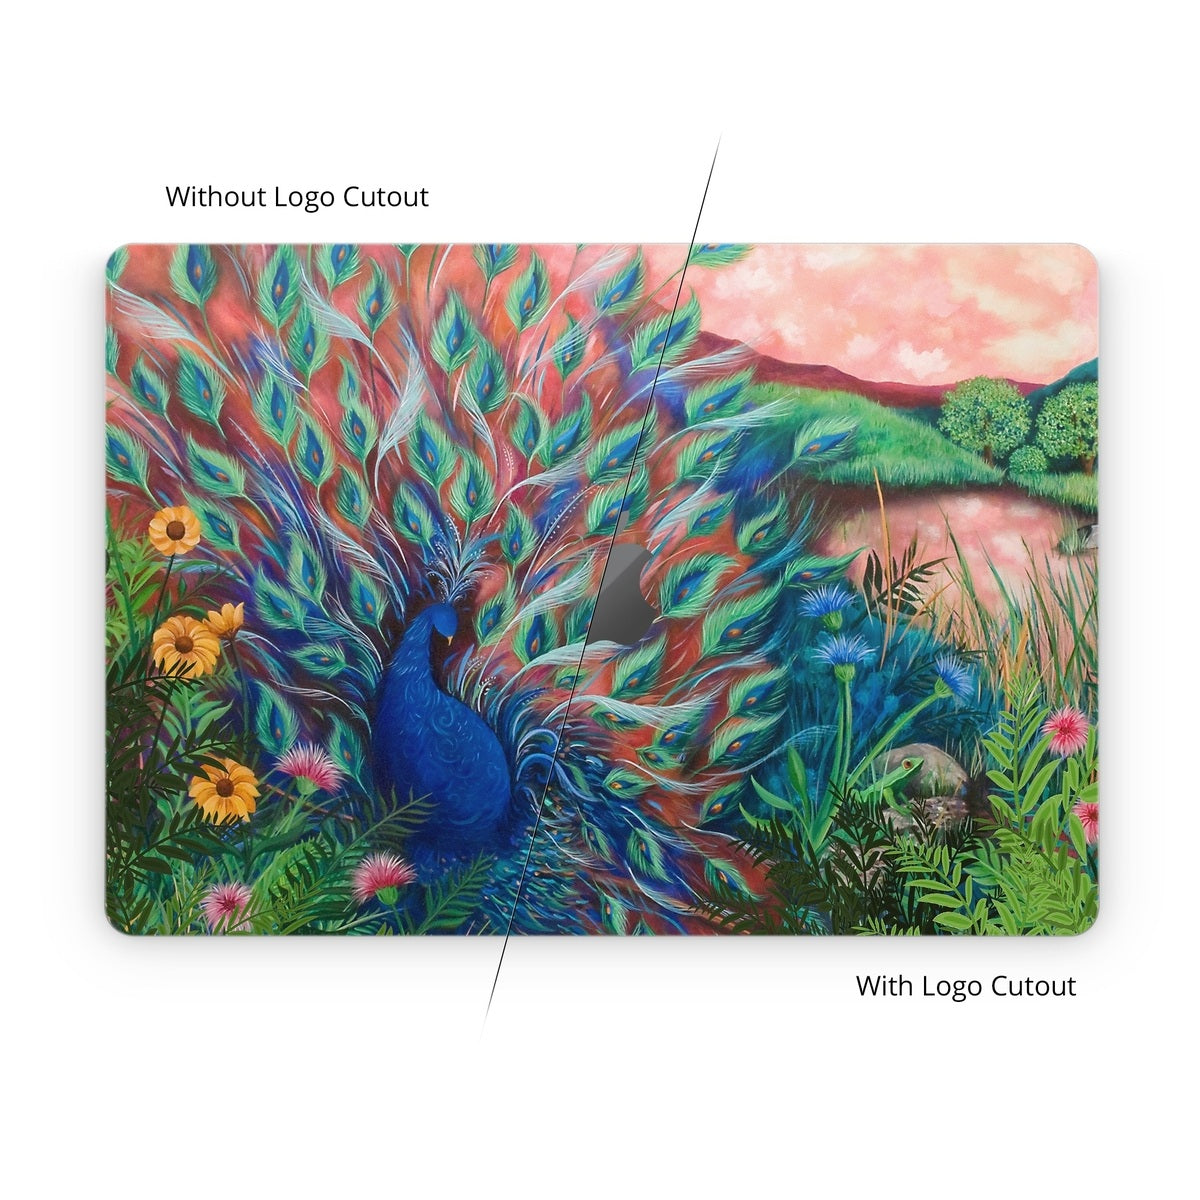 Coral Peacock - Apple MacBook Skin